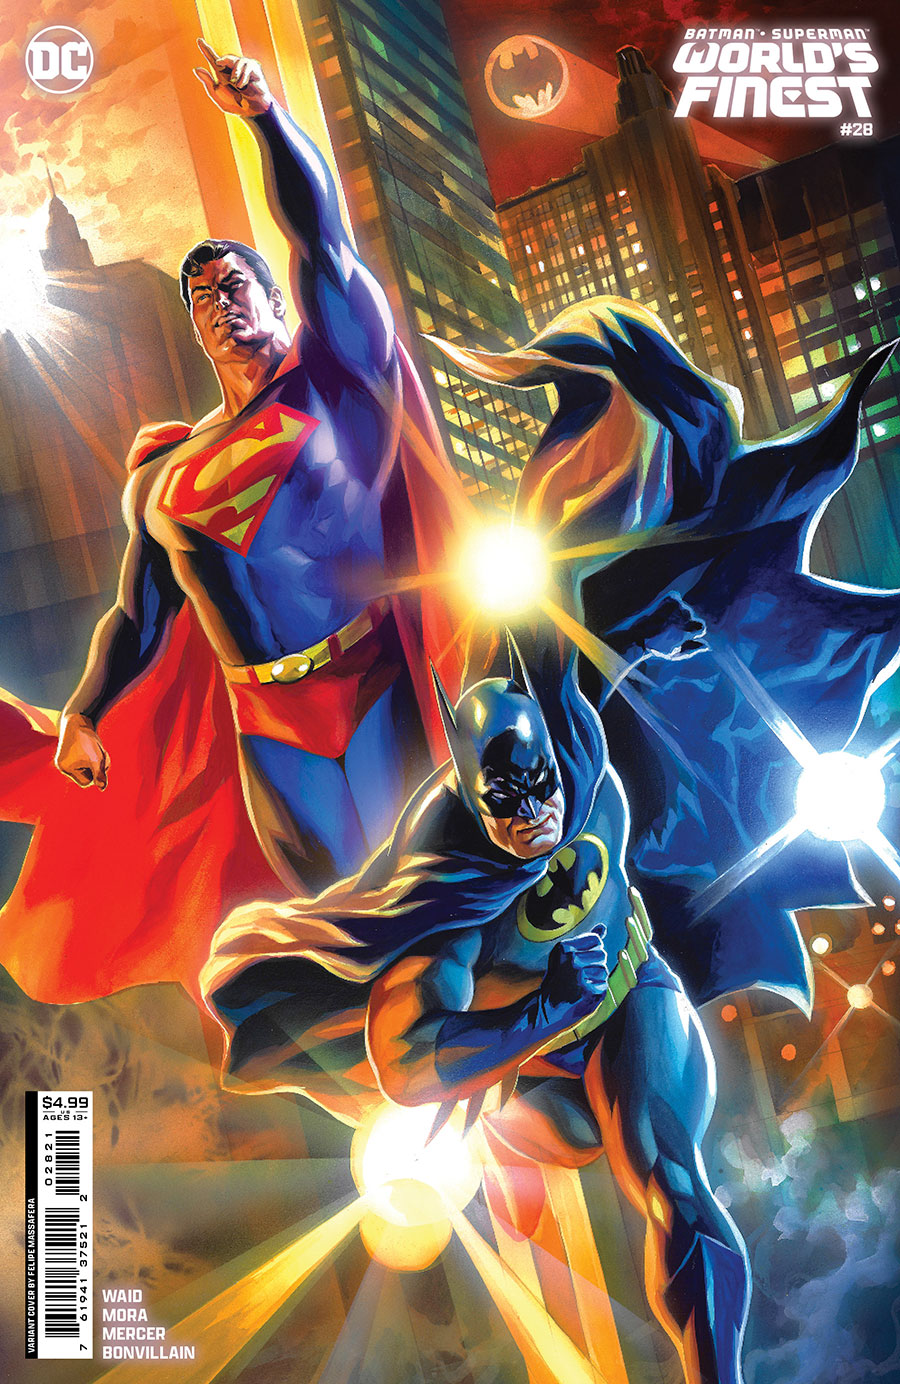 Batman Superman Worlds Finest #28 Cover C Variant Felipe Massafera Card Stock Cover